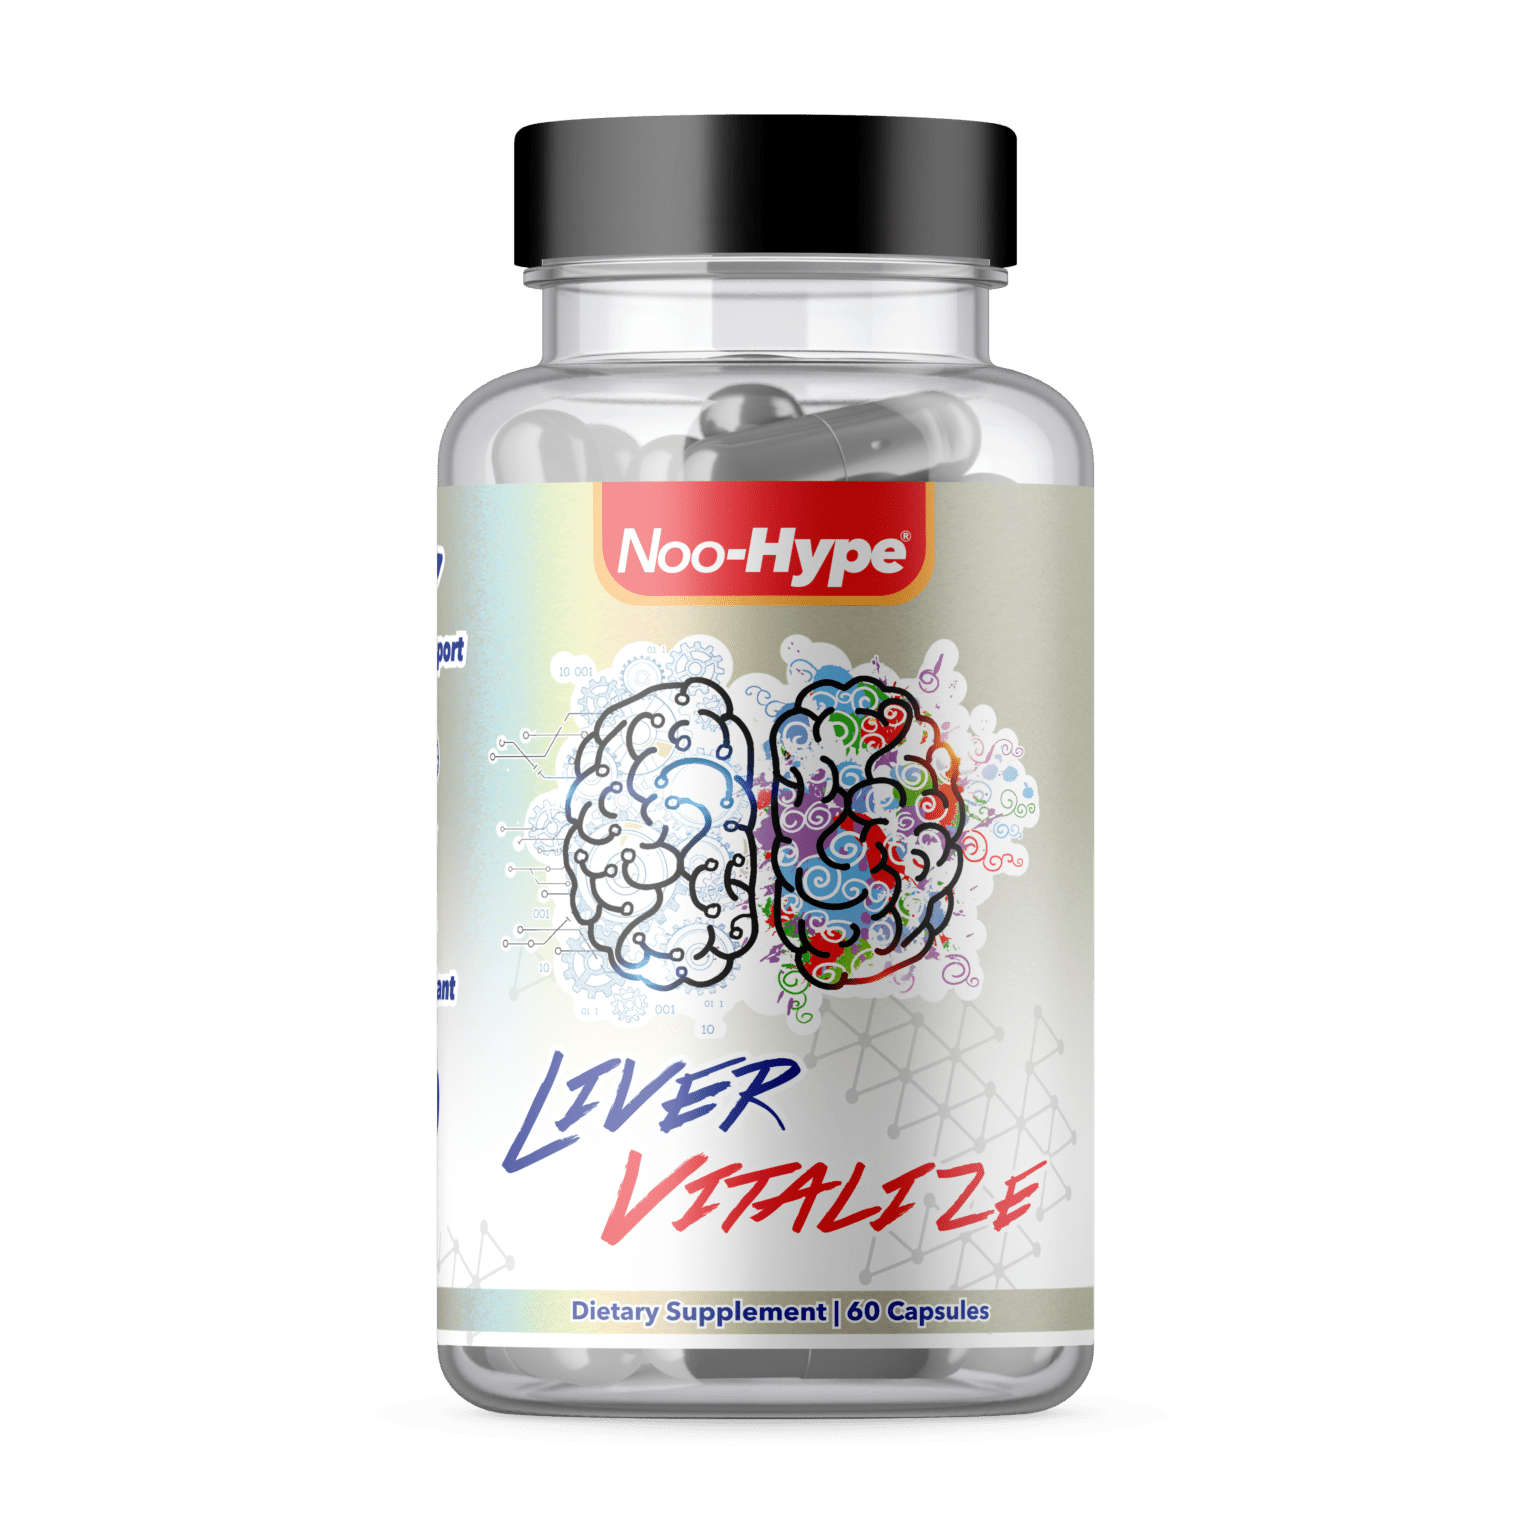 NooHype Liver Vitalize - Bemoxie Supplements